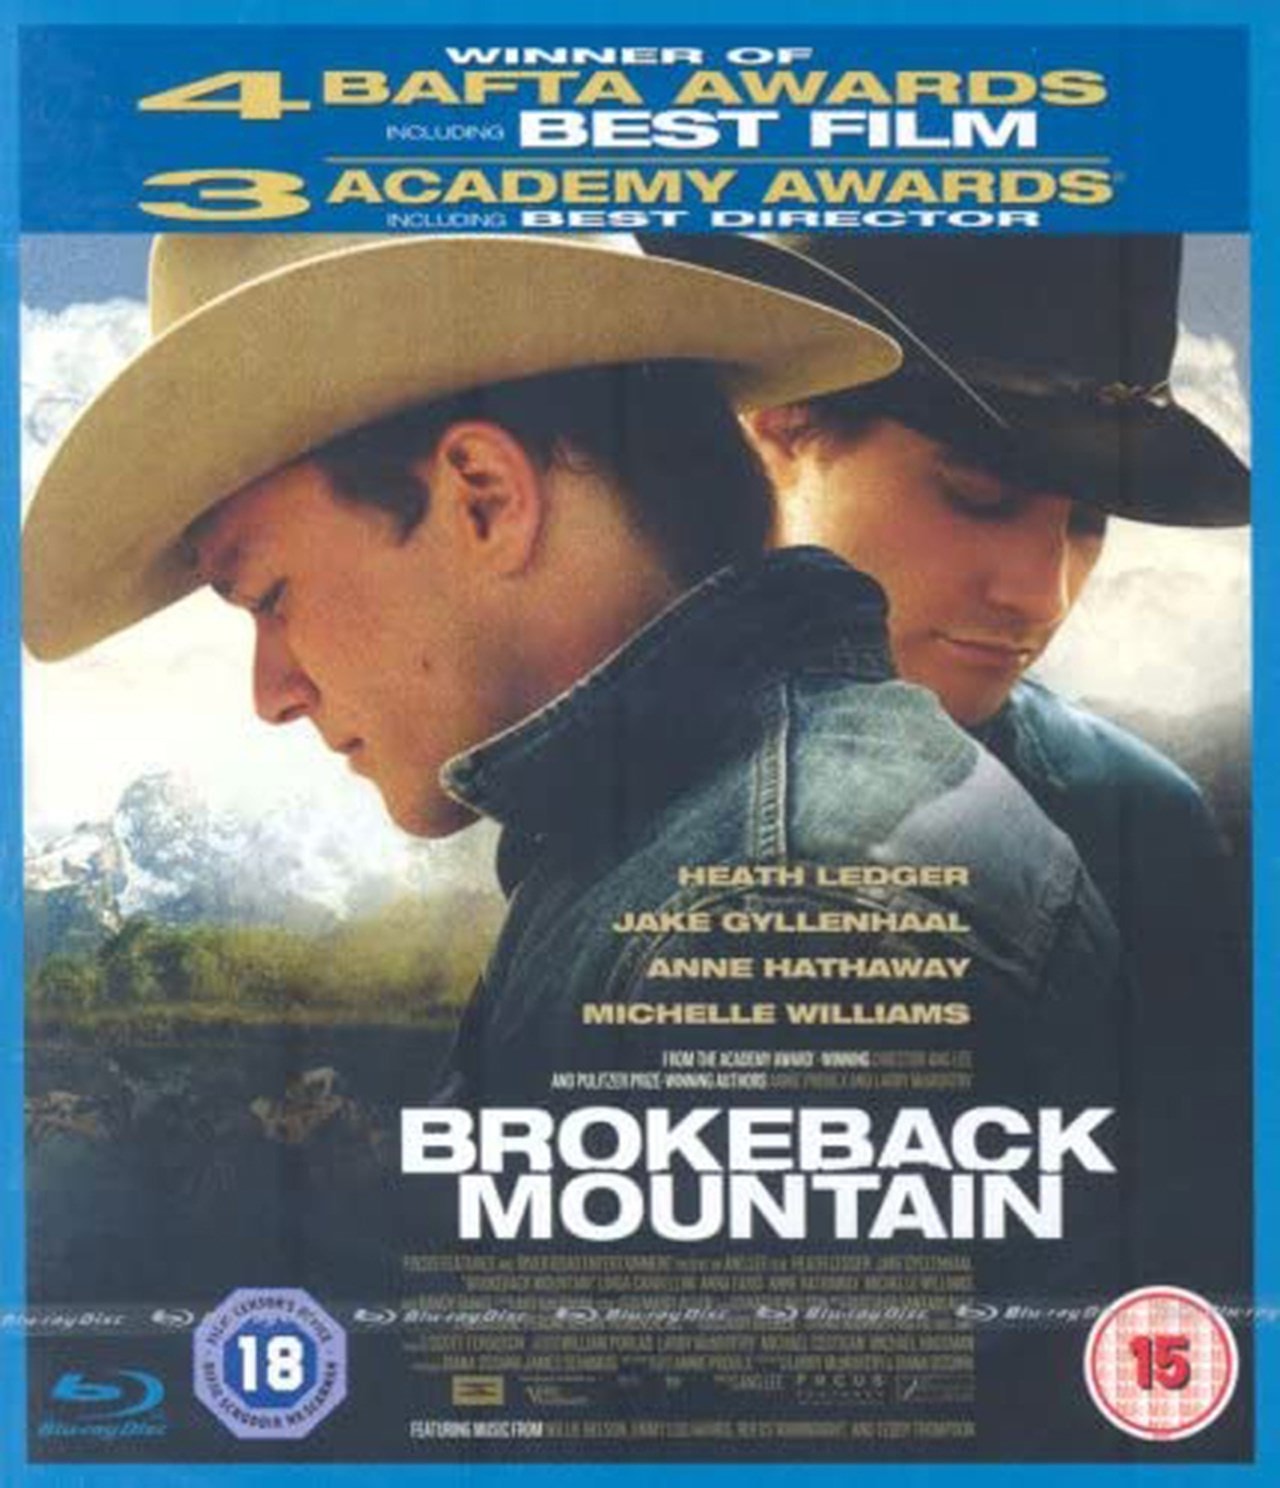 Brokeback Mountain | Blu-ray | Free shipping over £20 | HMV Store